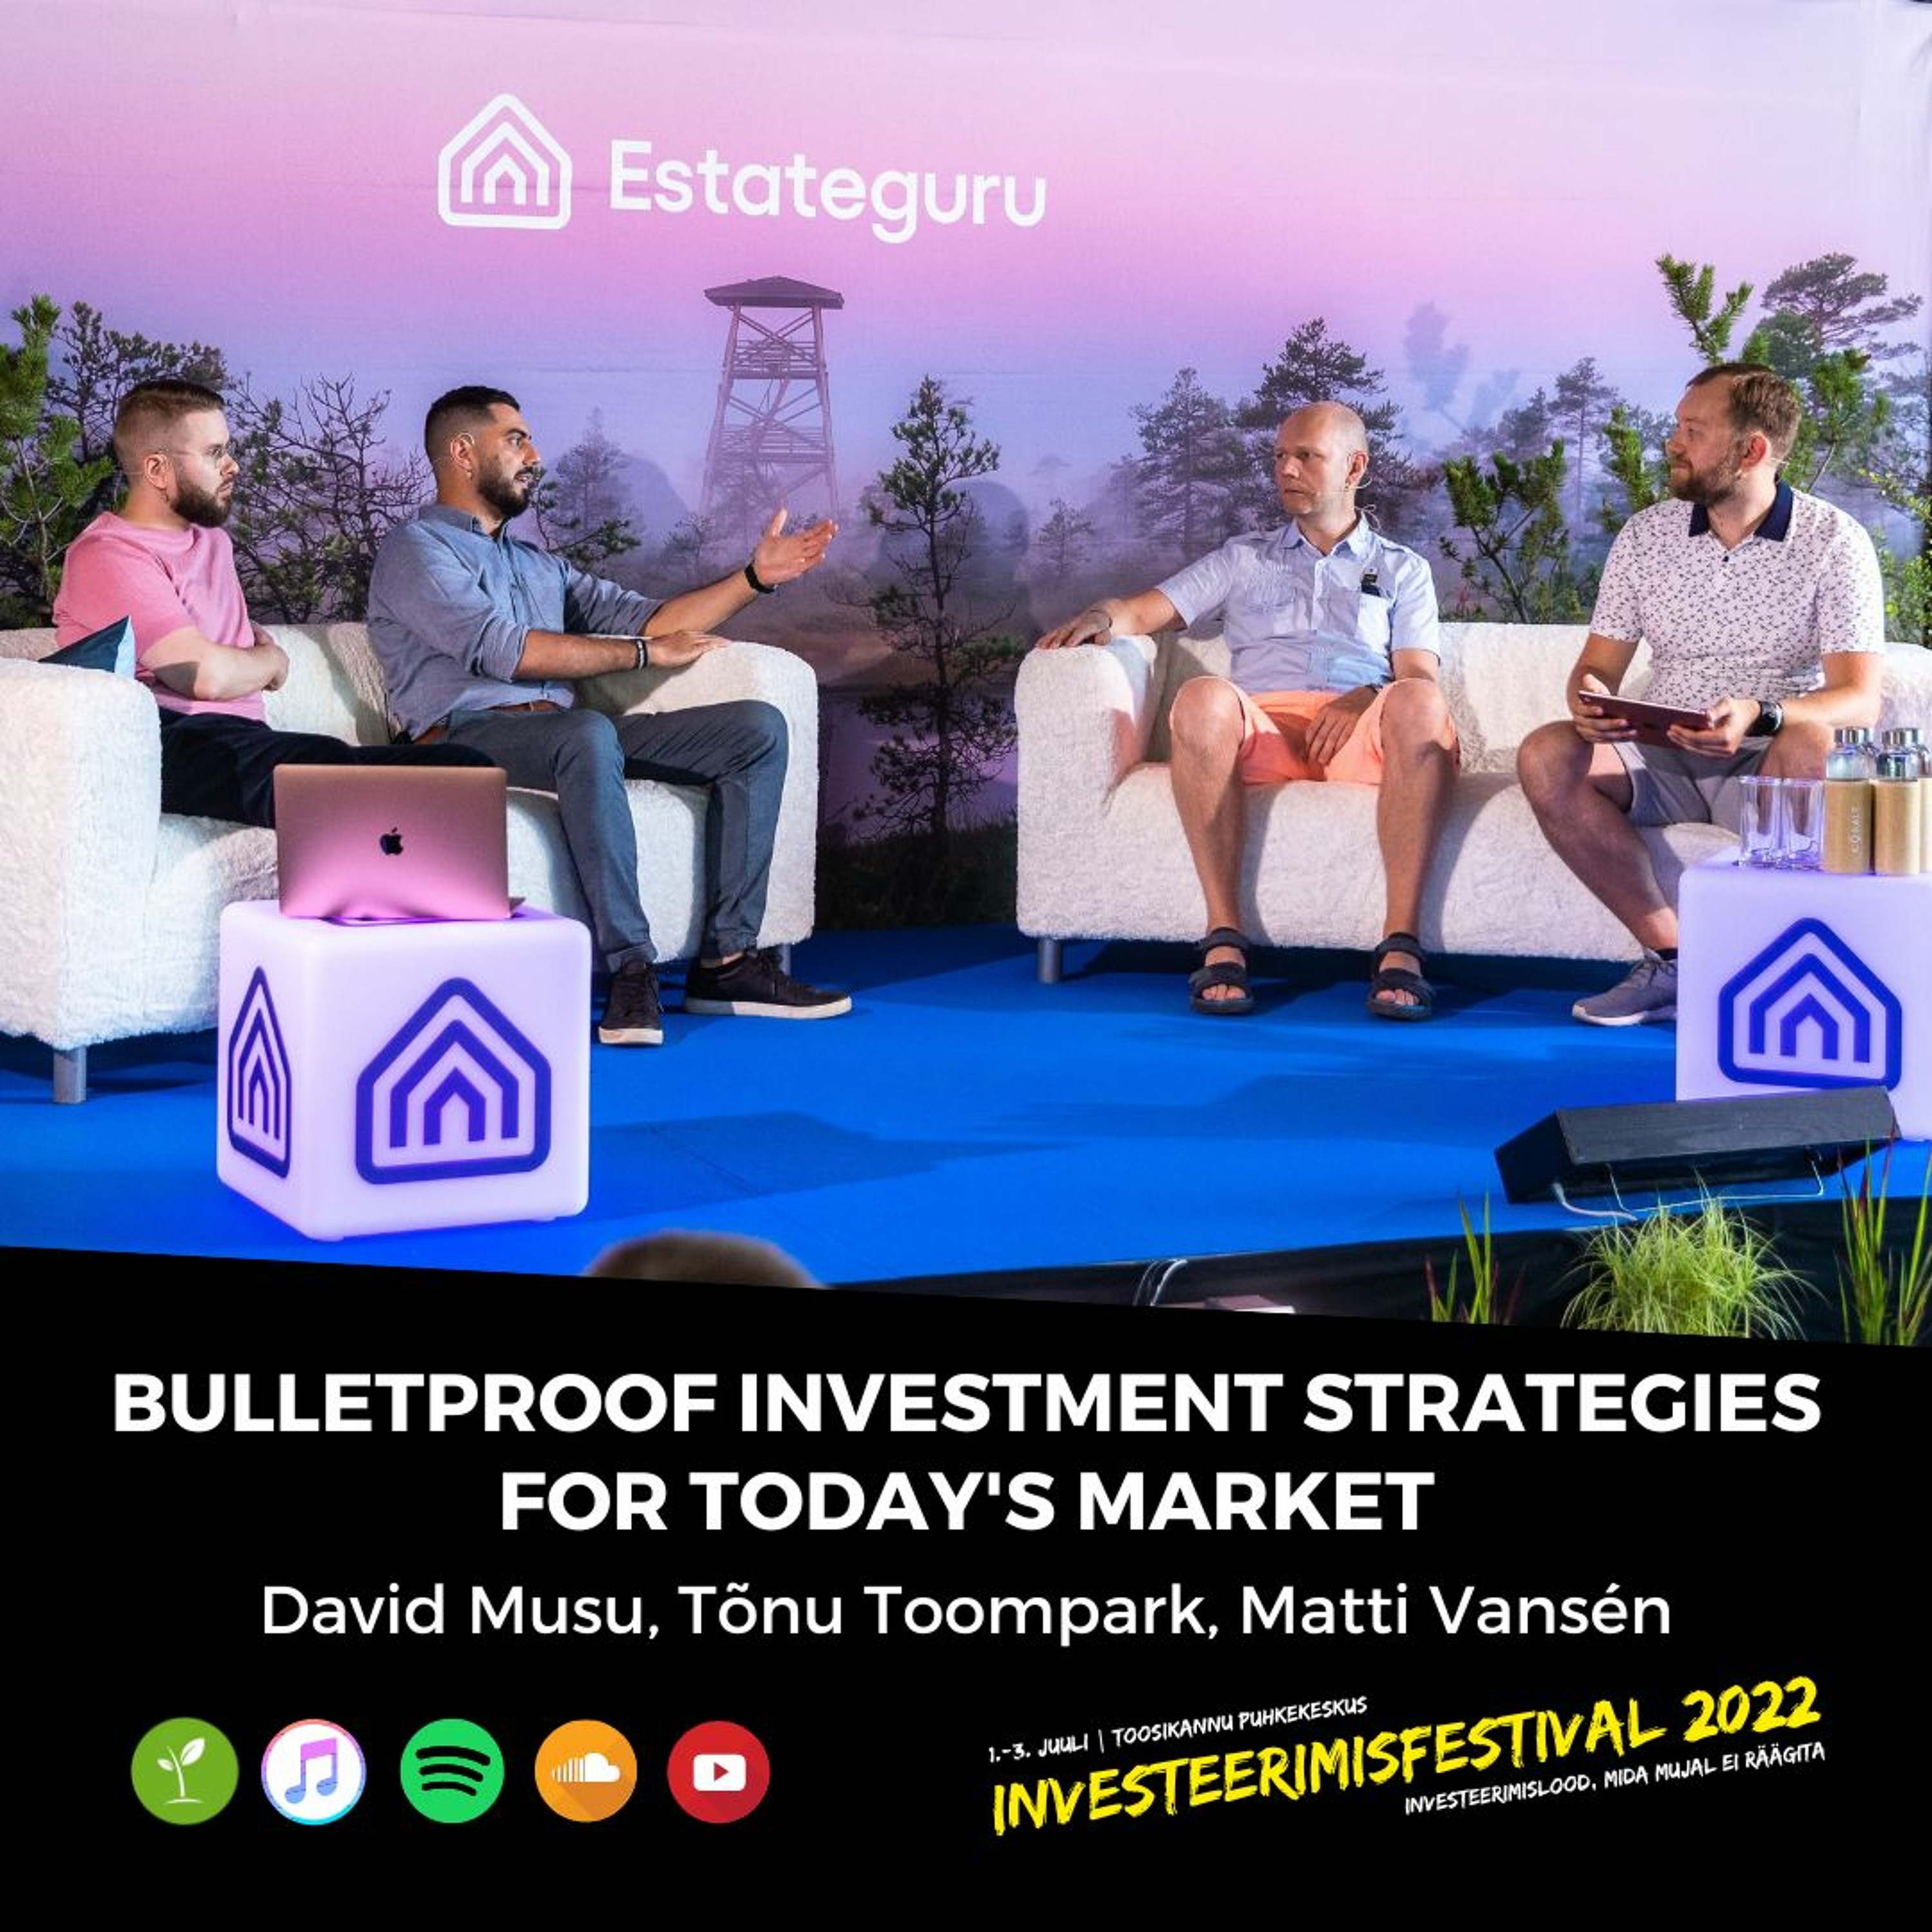 Bulletproof investment strategies for today’s market - David Musu, Tõnu Toompark, Matti Vansén